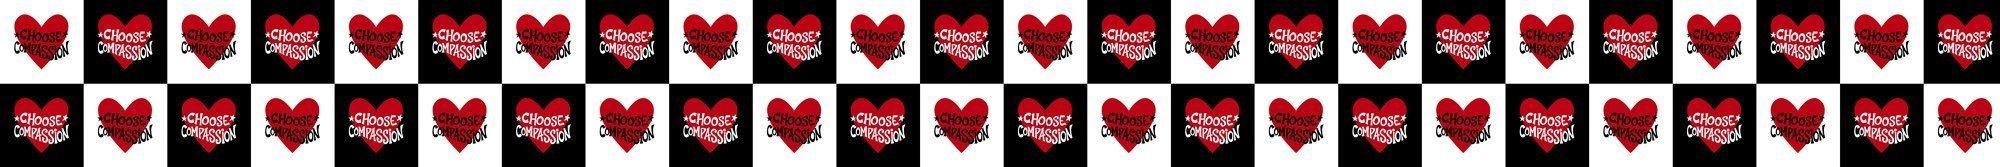 Choose Compassion Prints - The Art Of Nan Coffey